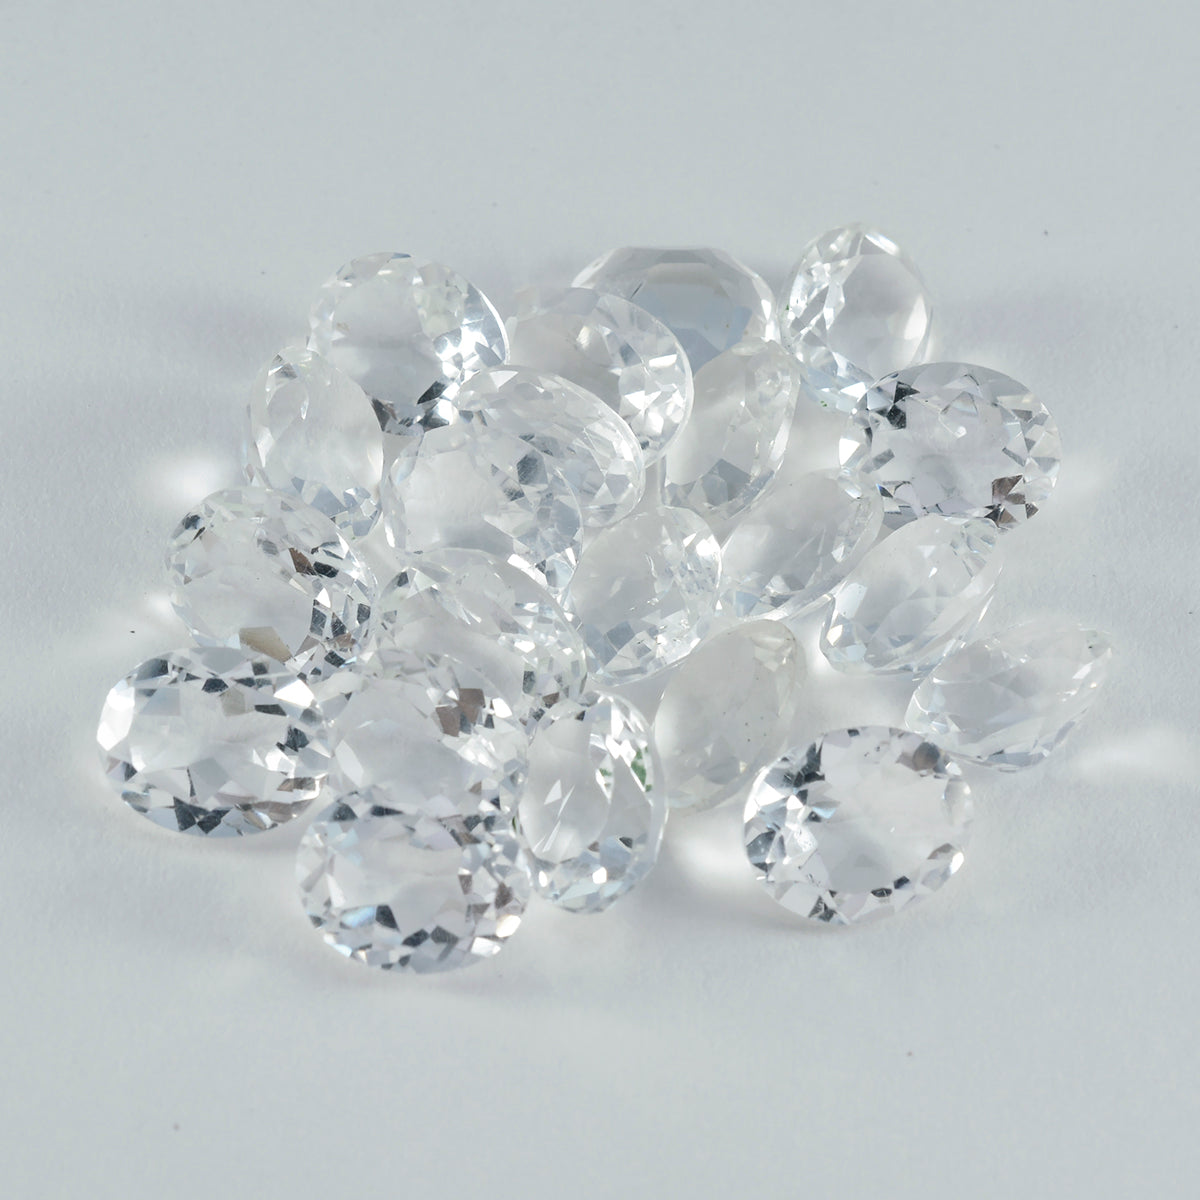 Riyogems 1PC White Crystal Quartz Faceted 6x8 mm Oval Shape handsome Quality Gems